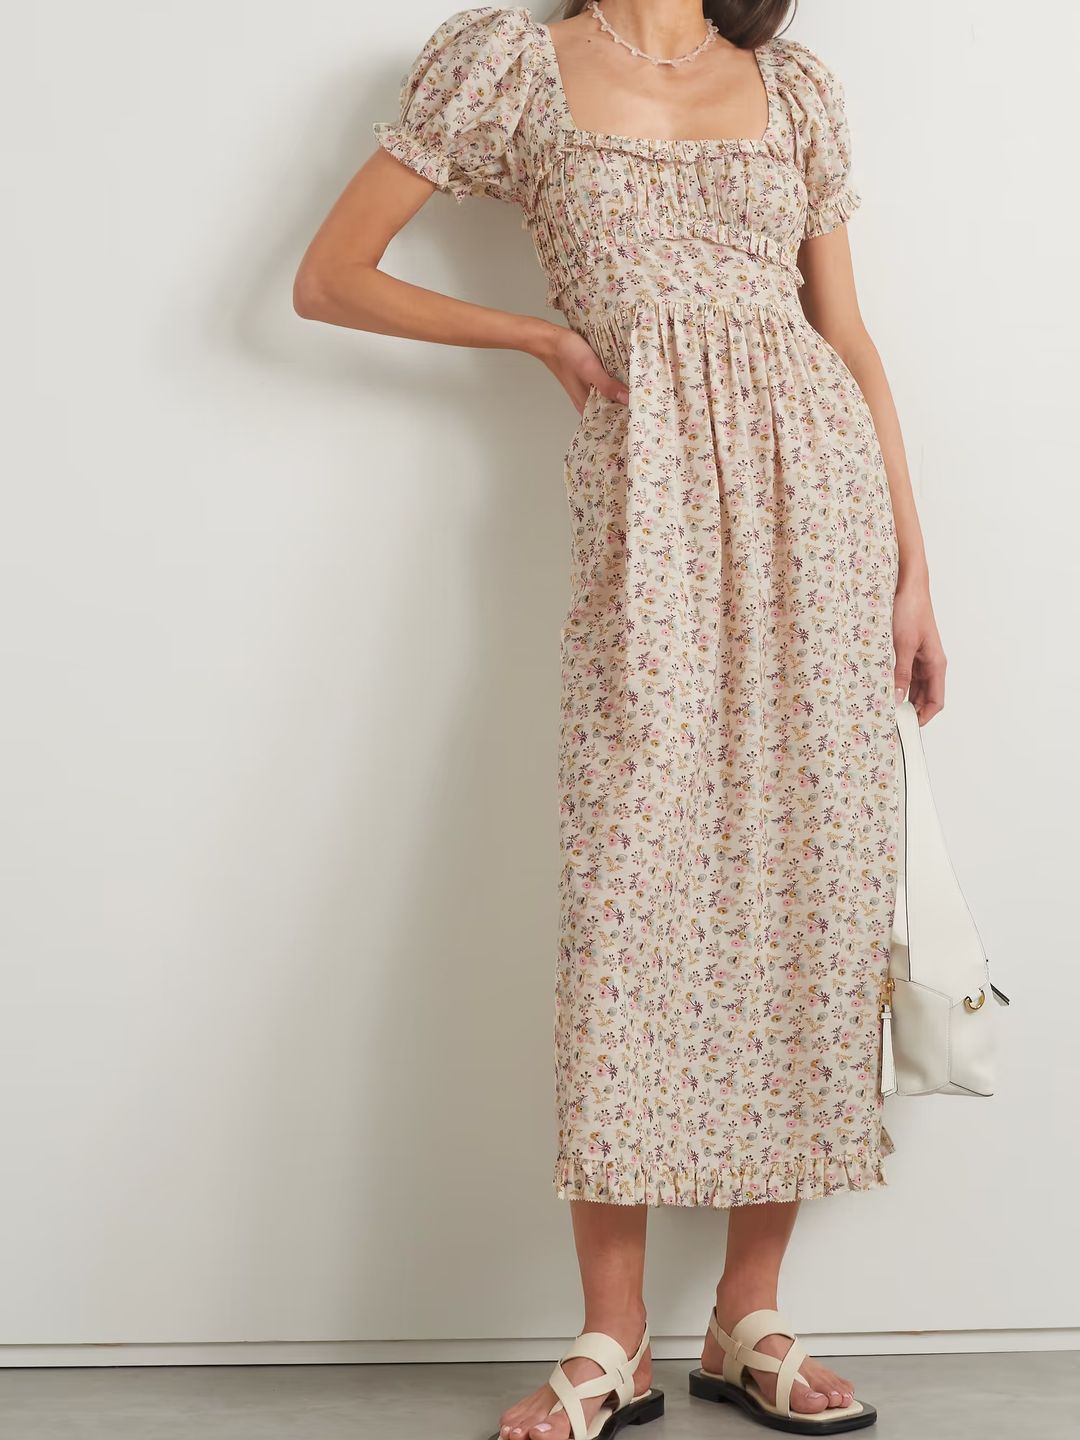  Gia ruffled floral-print dress - Dôen